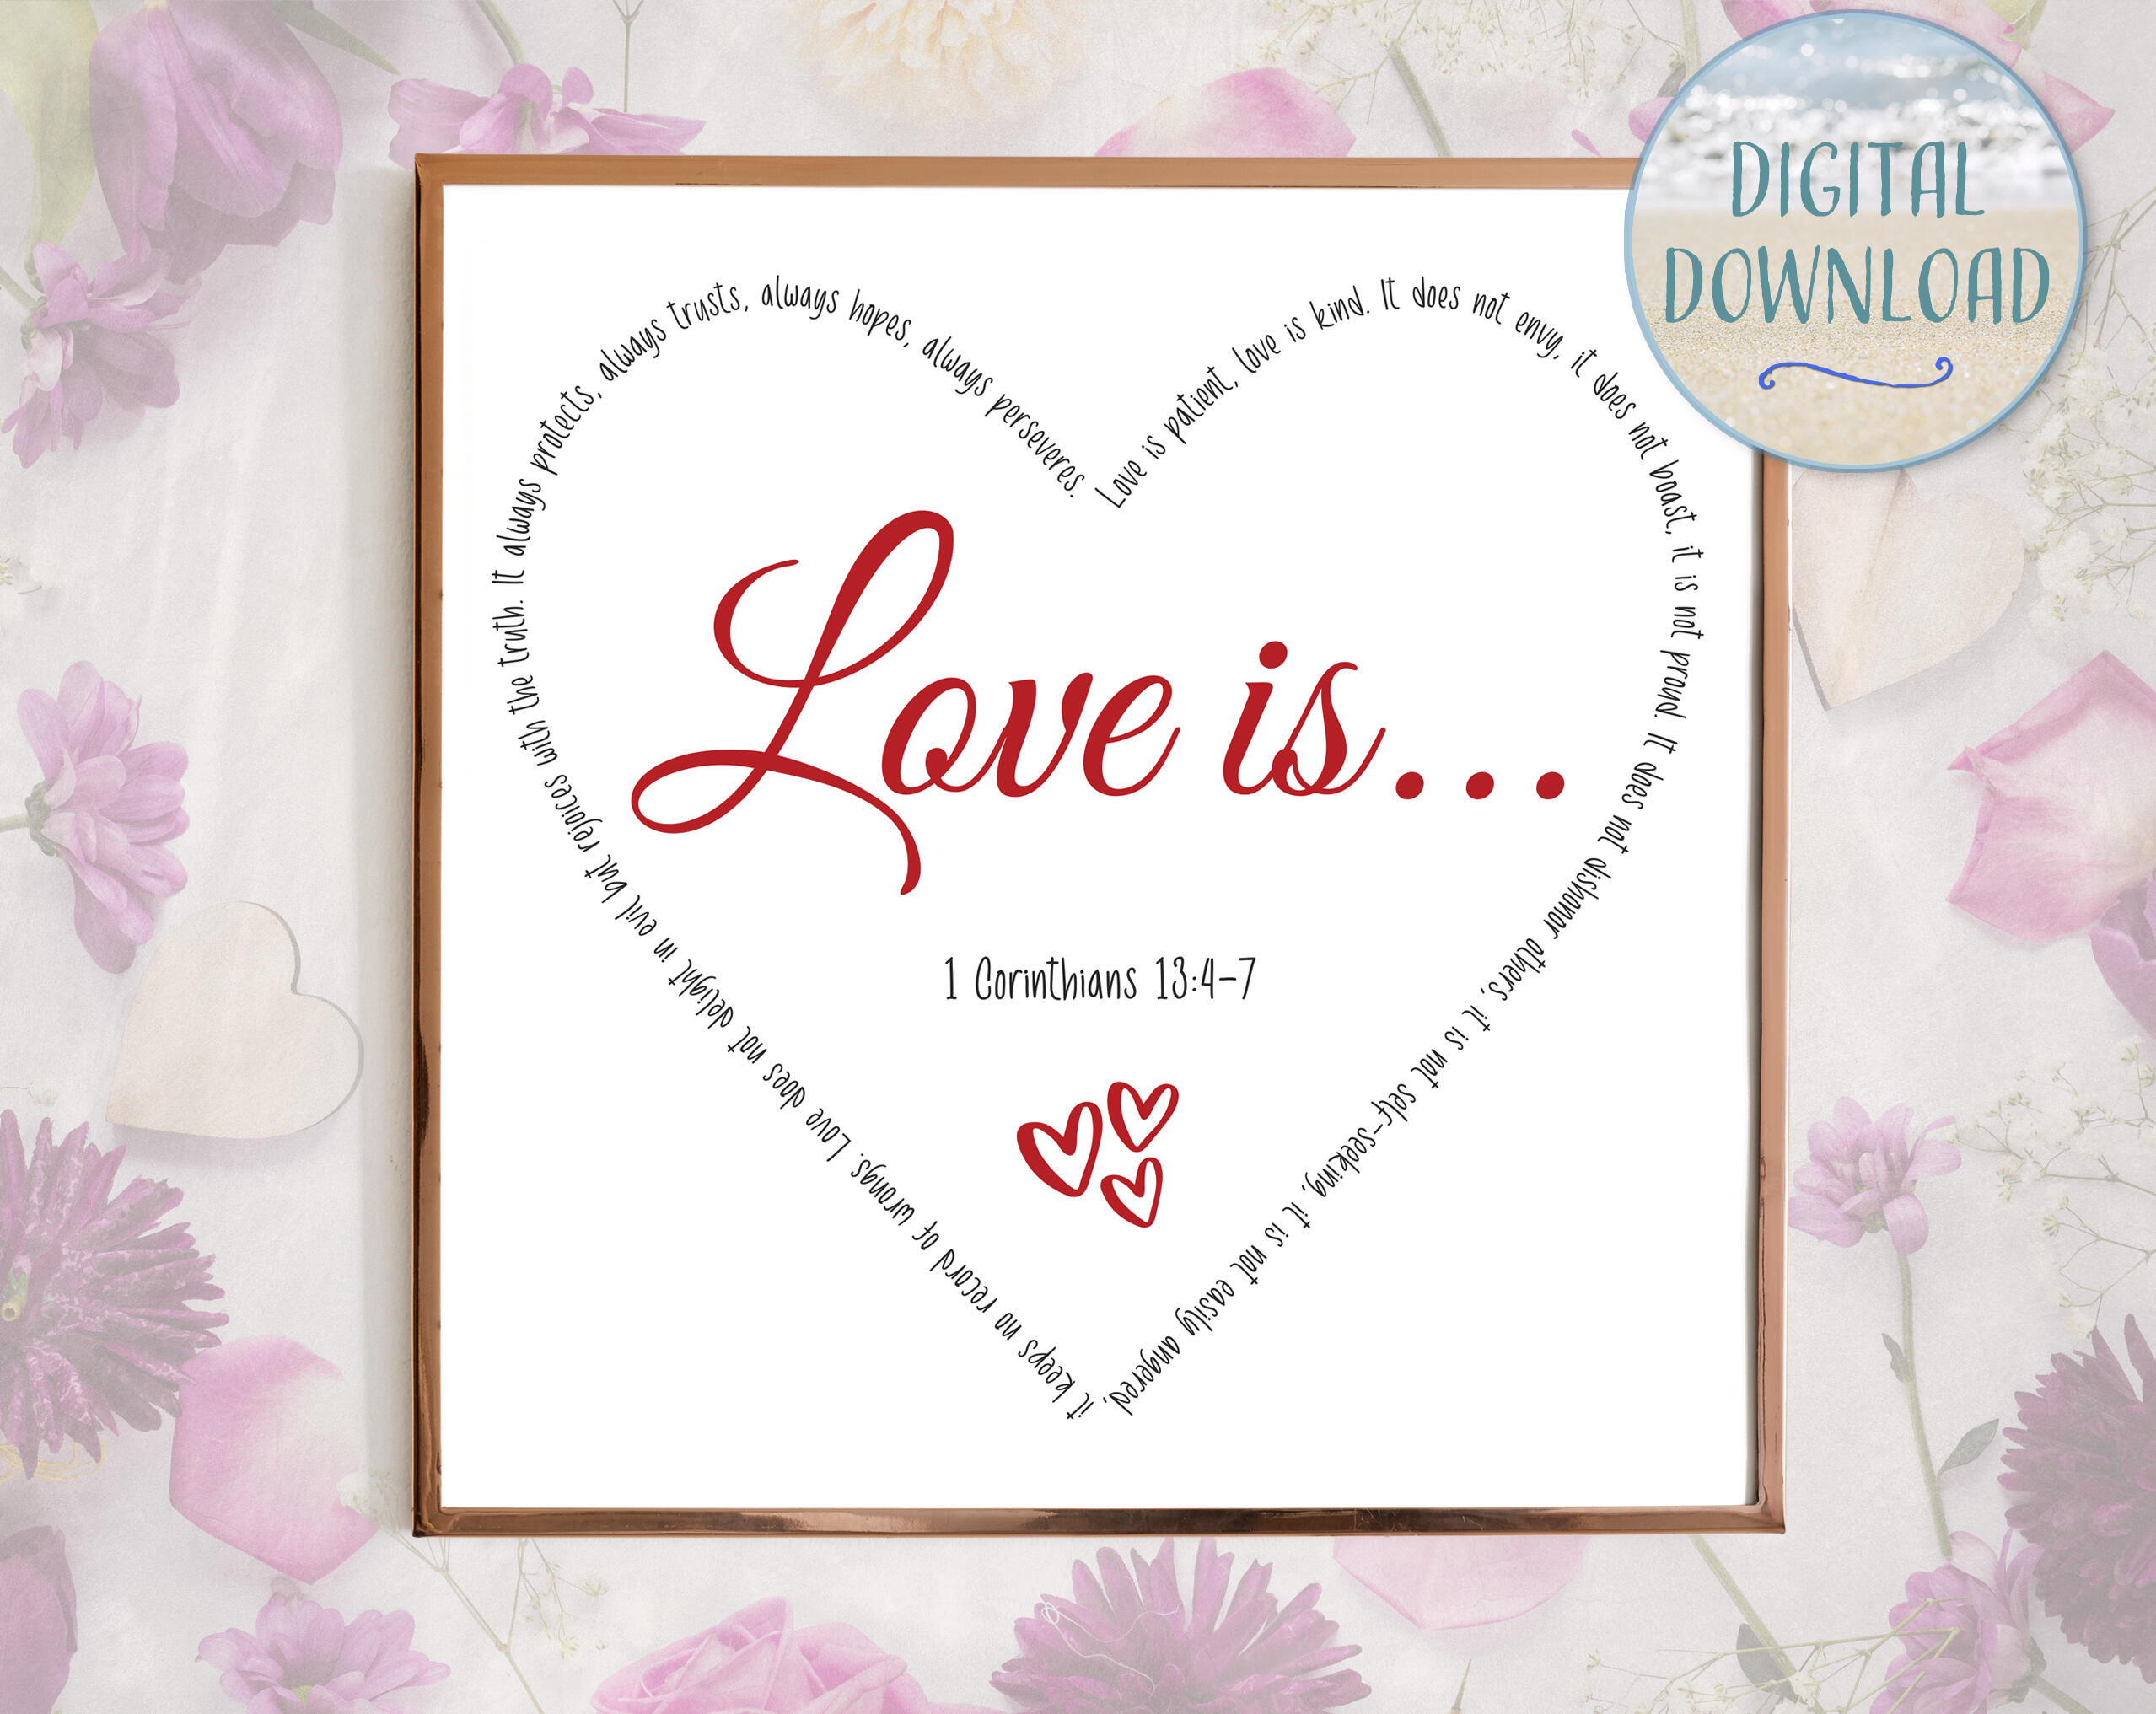 Love Is Patient Love Is Kind, 1 Corinthians 13:4-7 Digital Download